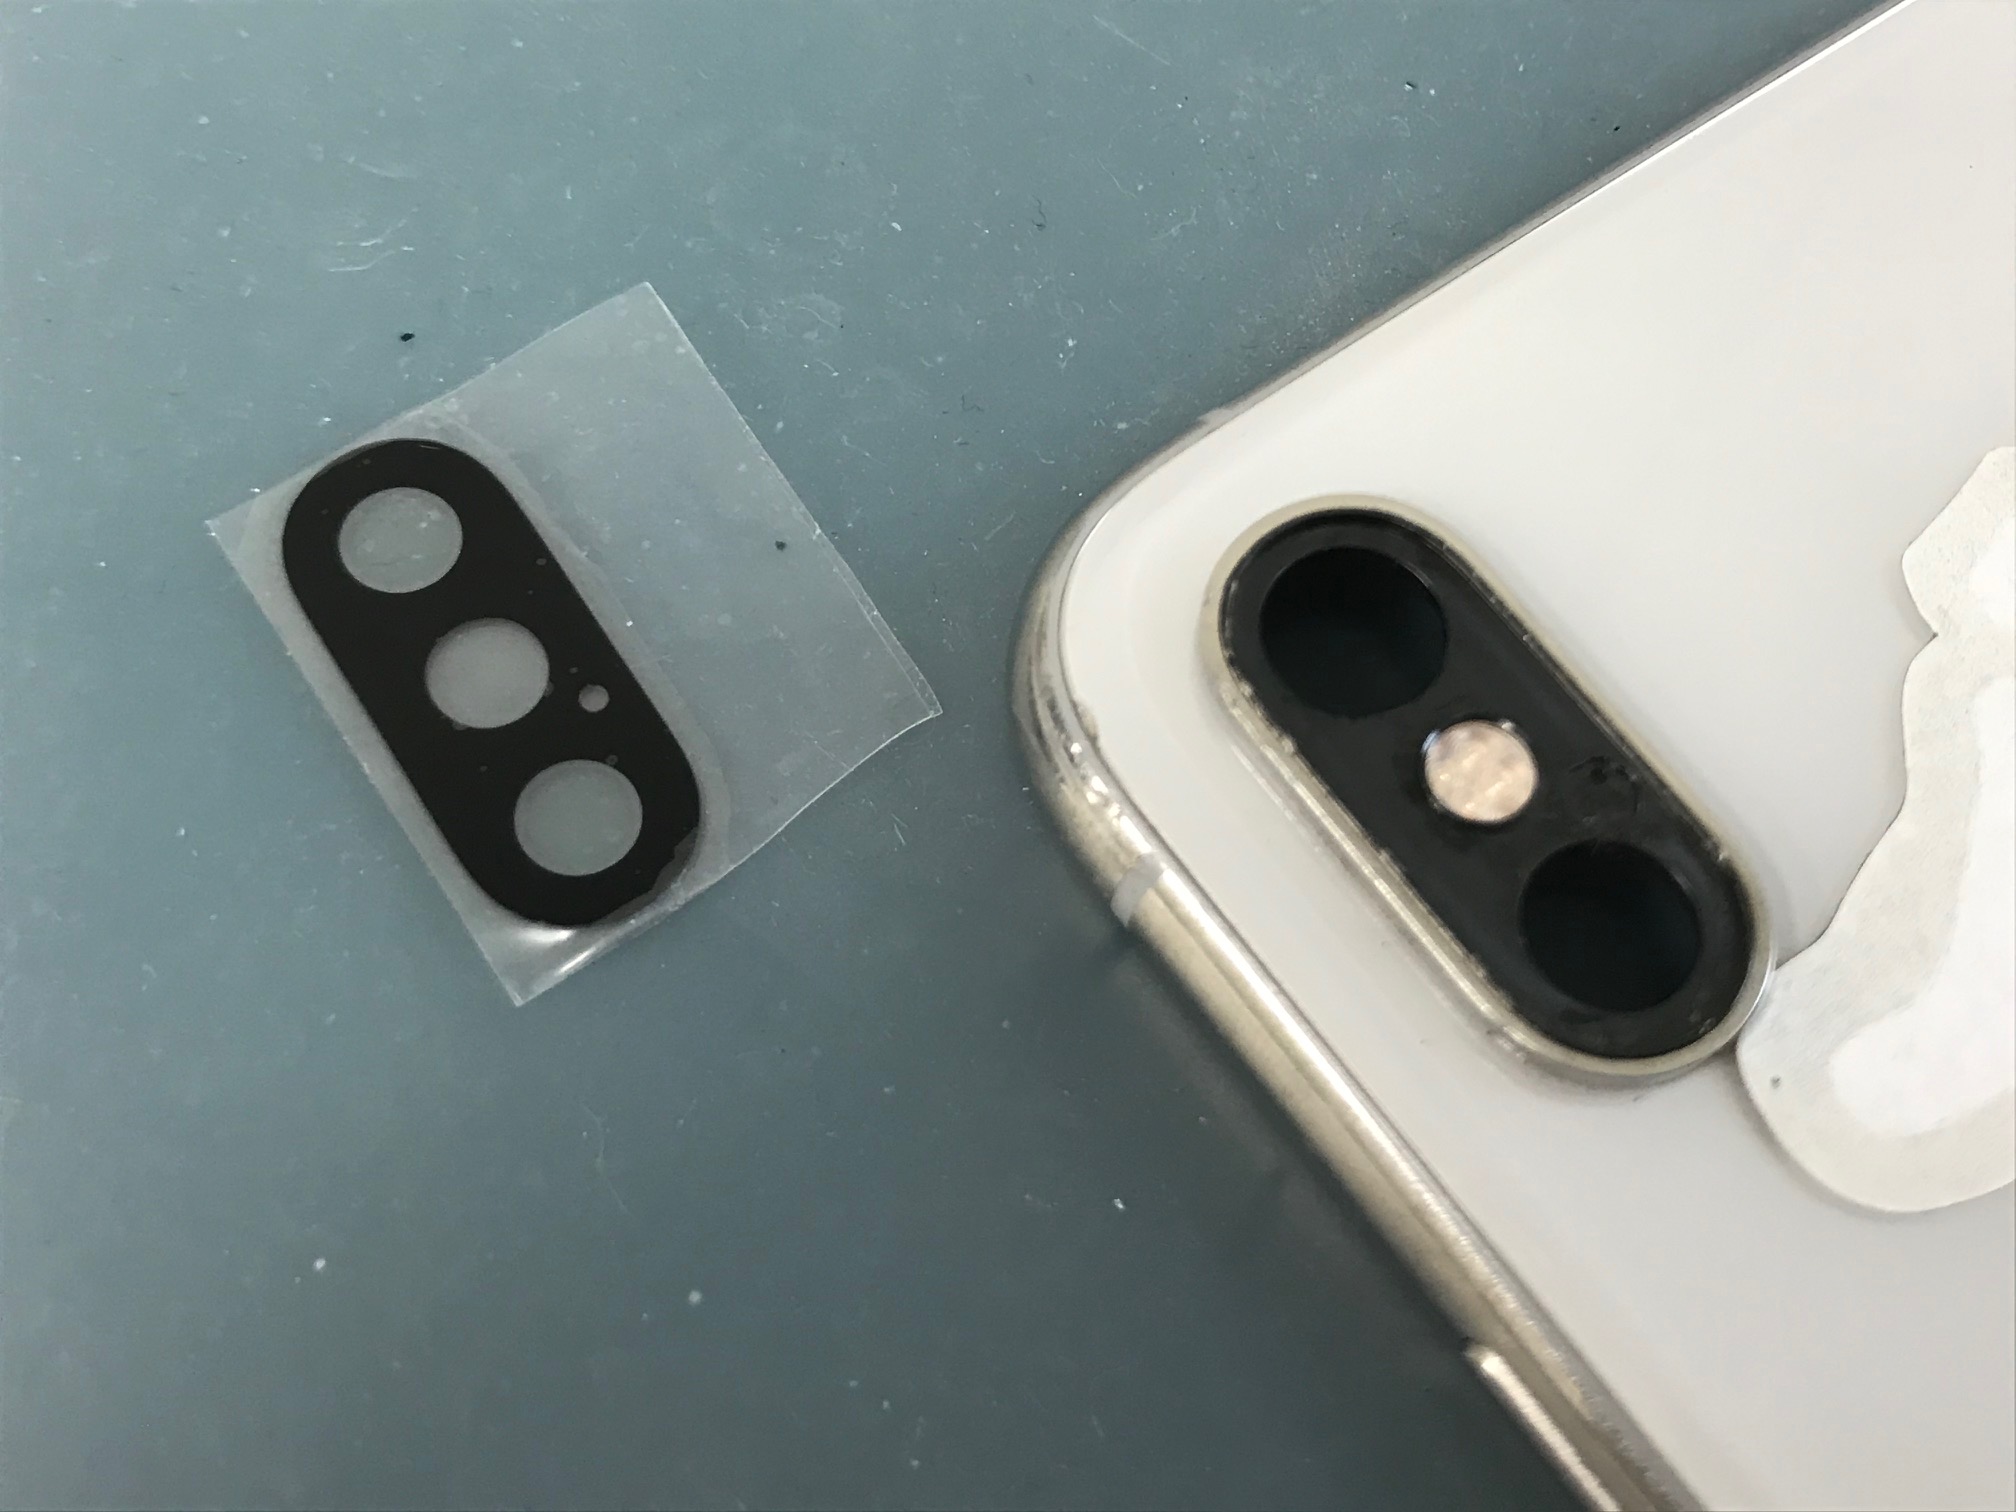 Iphone Xs アウトカメラに斑点が 割れたカメラレンズが原因 それとも故障 Iphone修理ジャパン池袋店スタッフブログ